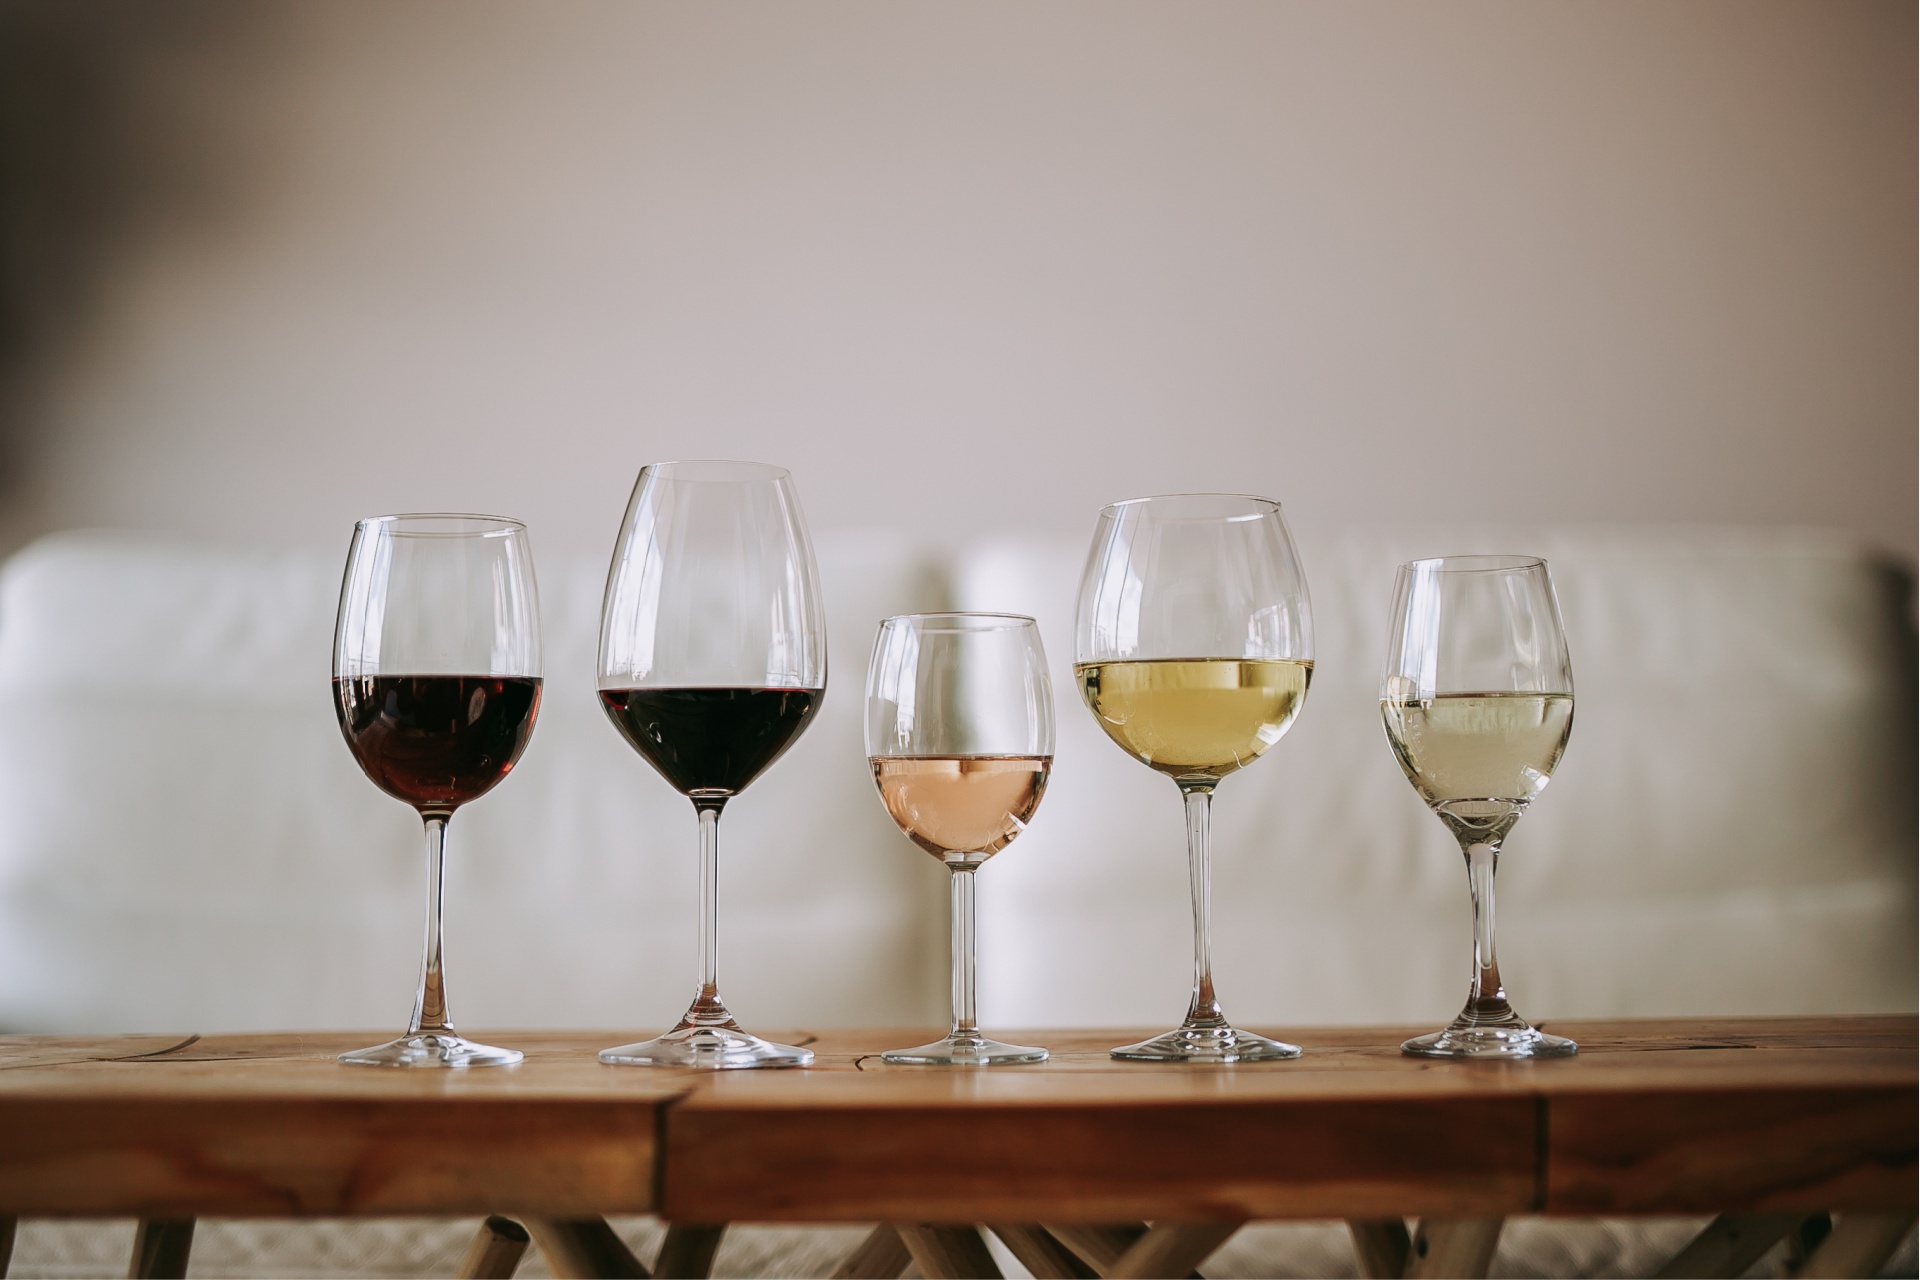 Can wine give you a headache?